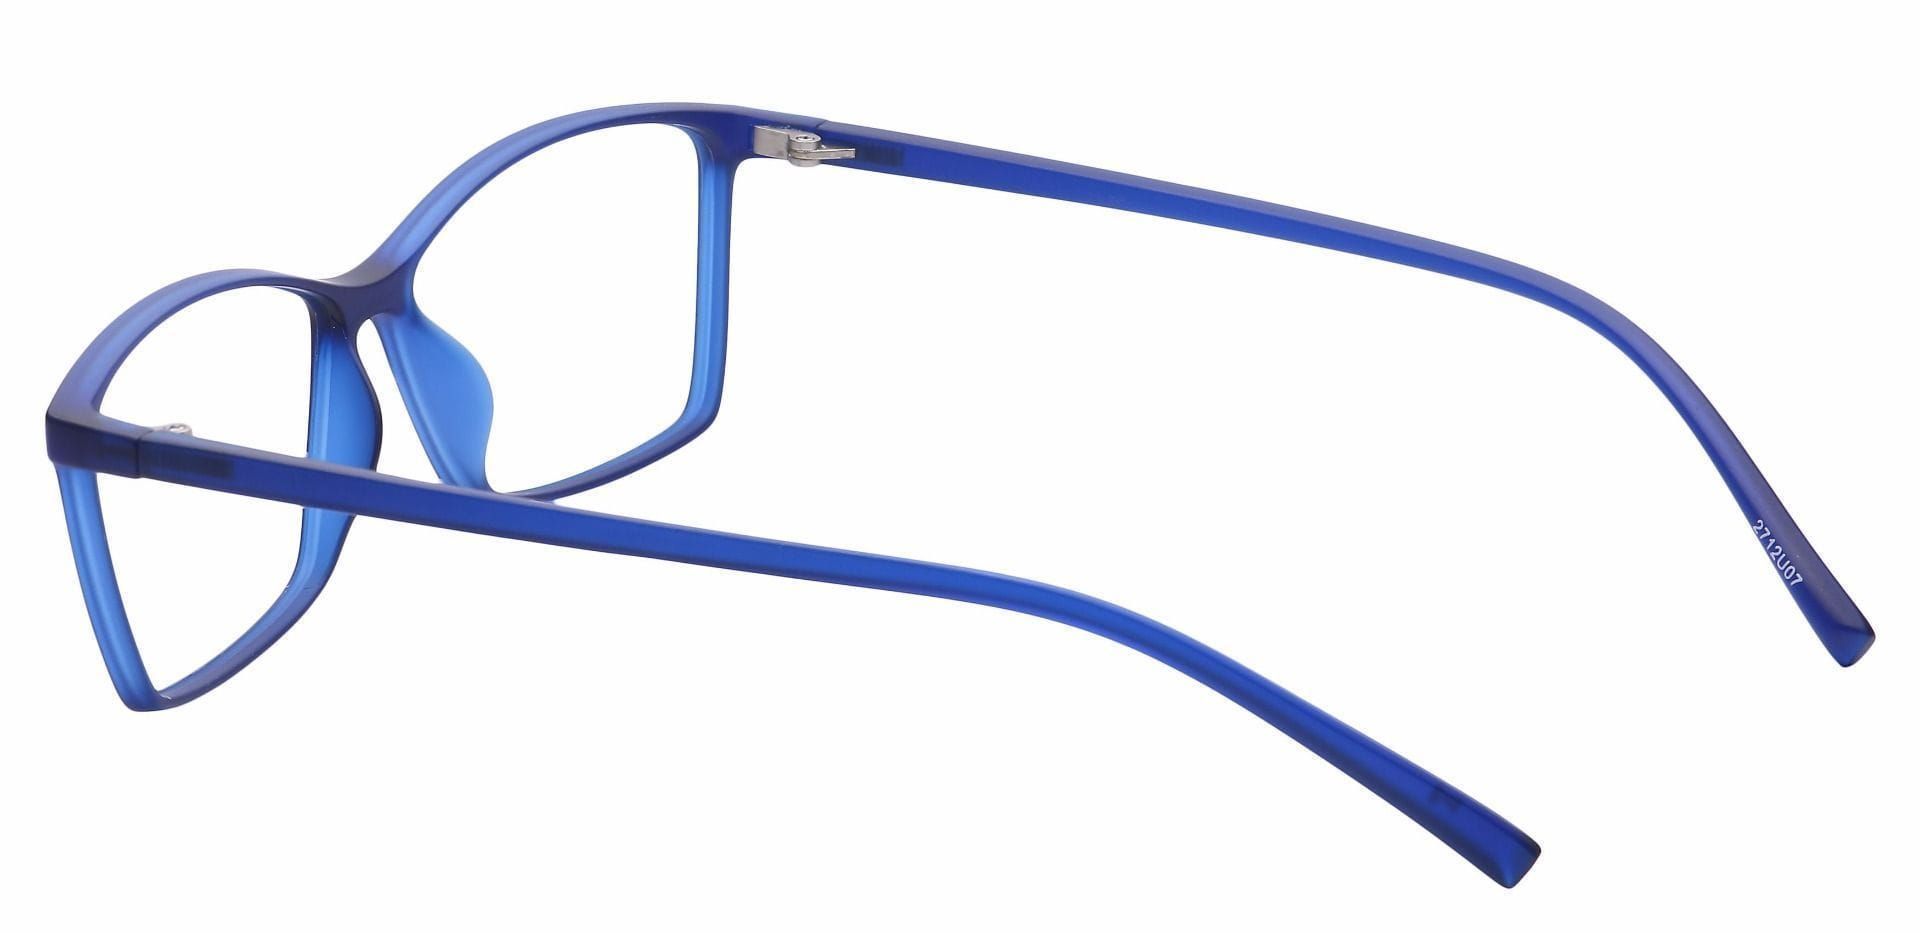 Align Rectangle Lined Bifocal Glasses - Blue